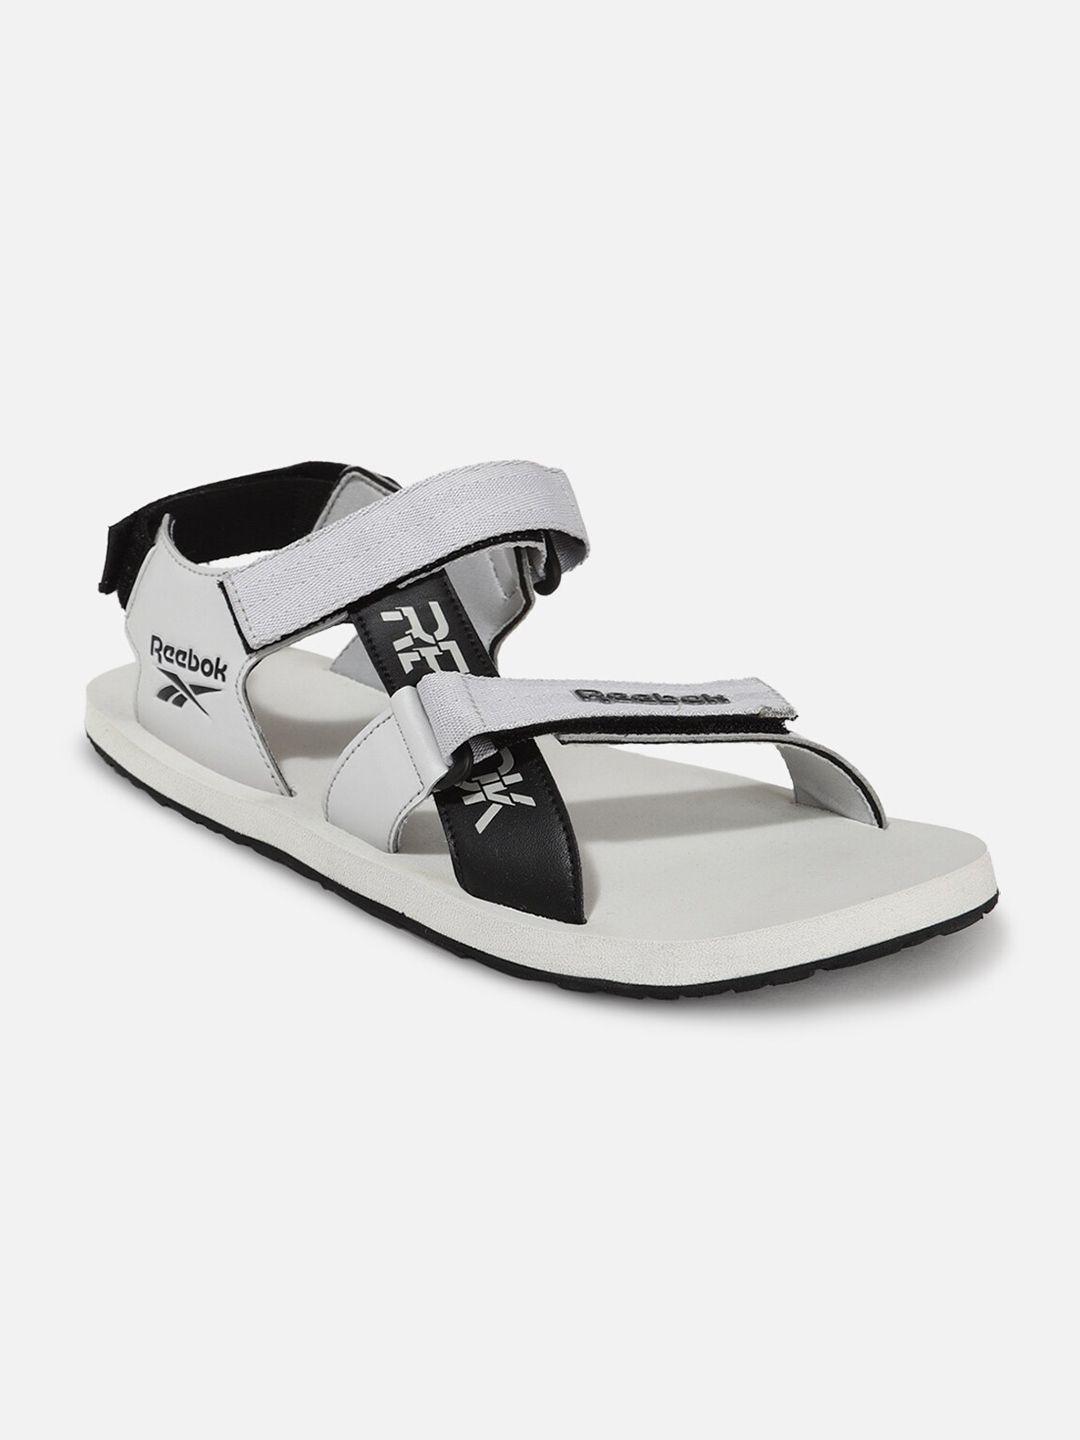 reebok men axel brand logo printed sport sandals